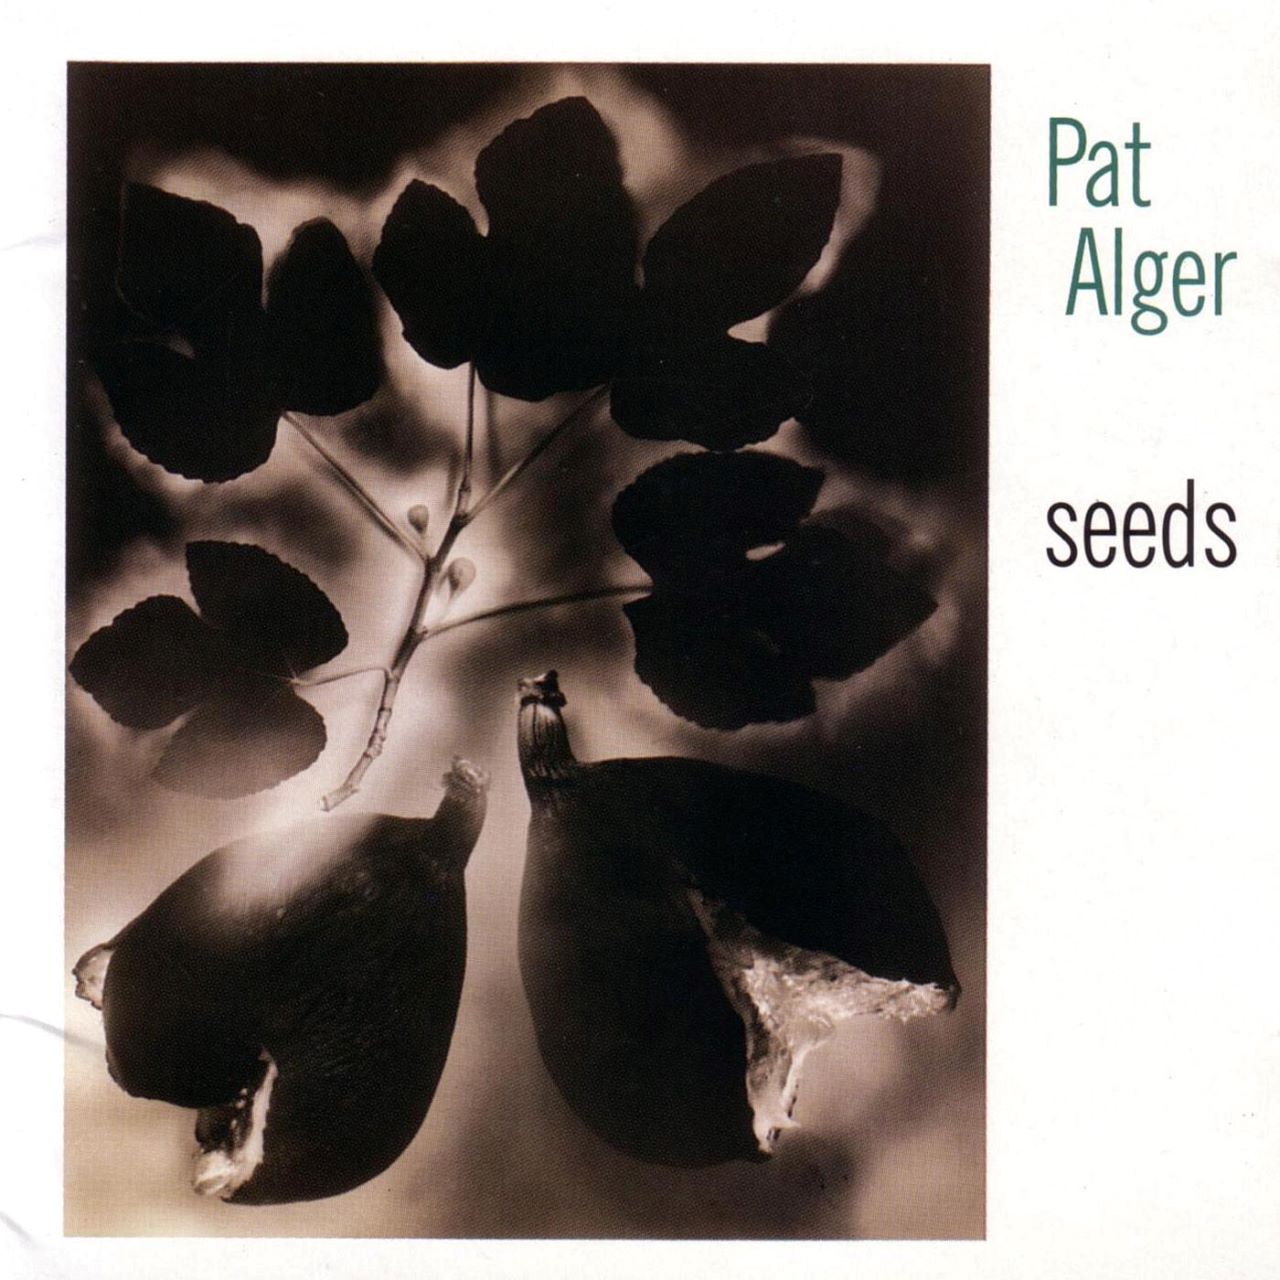 Pat Alger - Seeds cover album